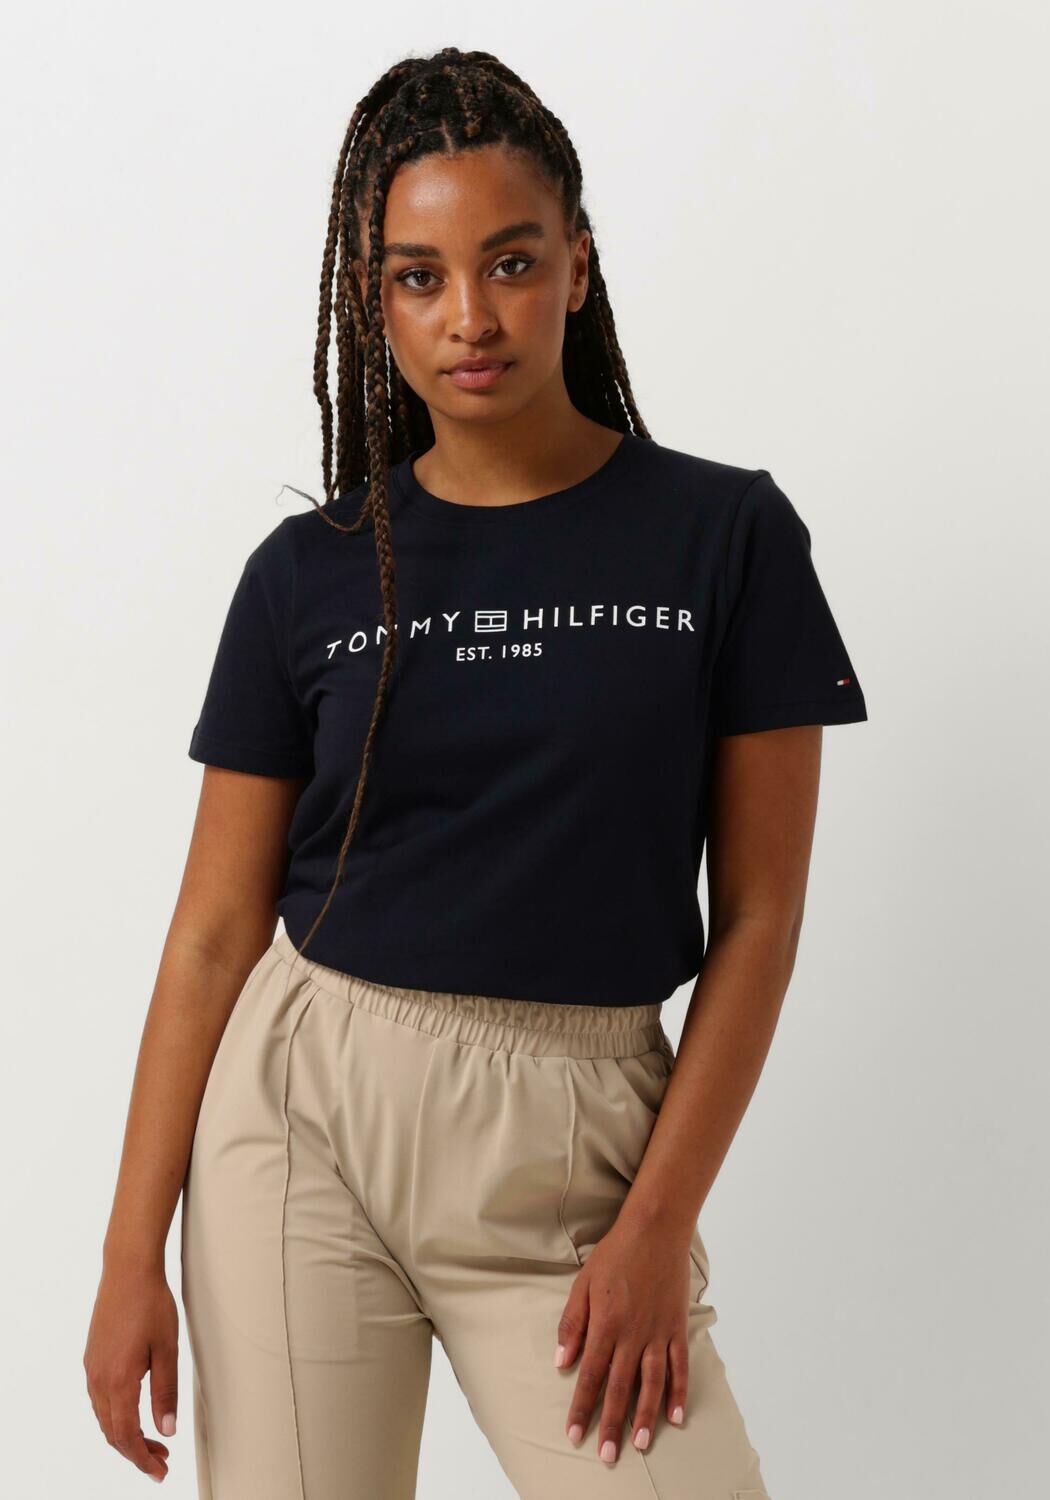 TOMMY HILFIGER Dames Tops & T-shirts Rec Corp Logo C-nk Donkerblauw